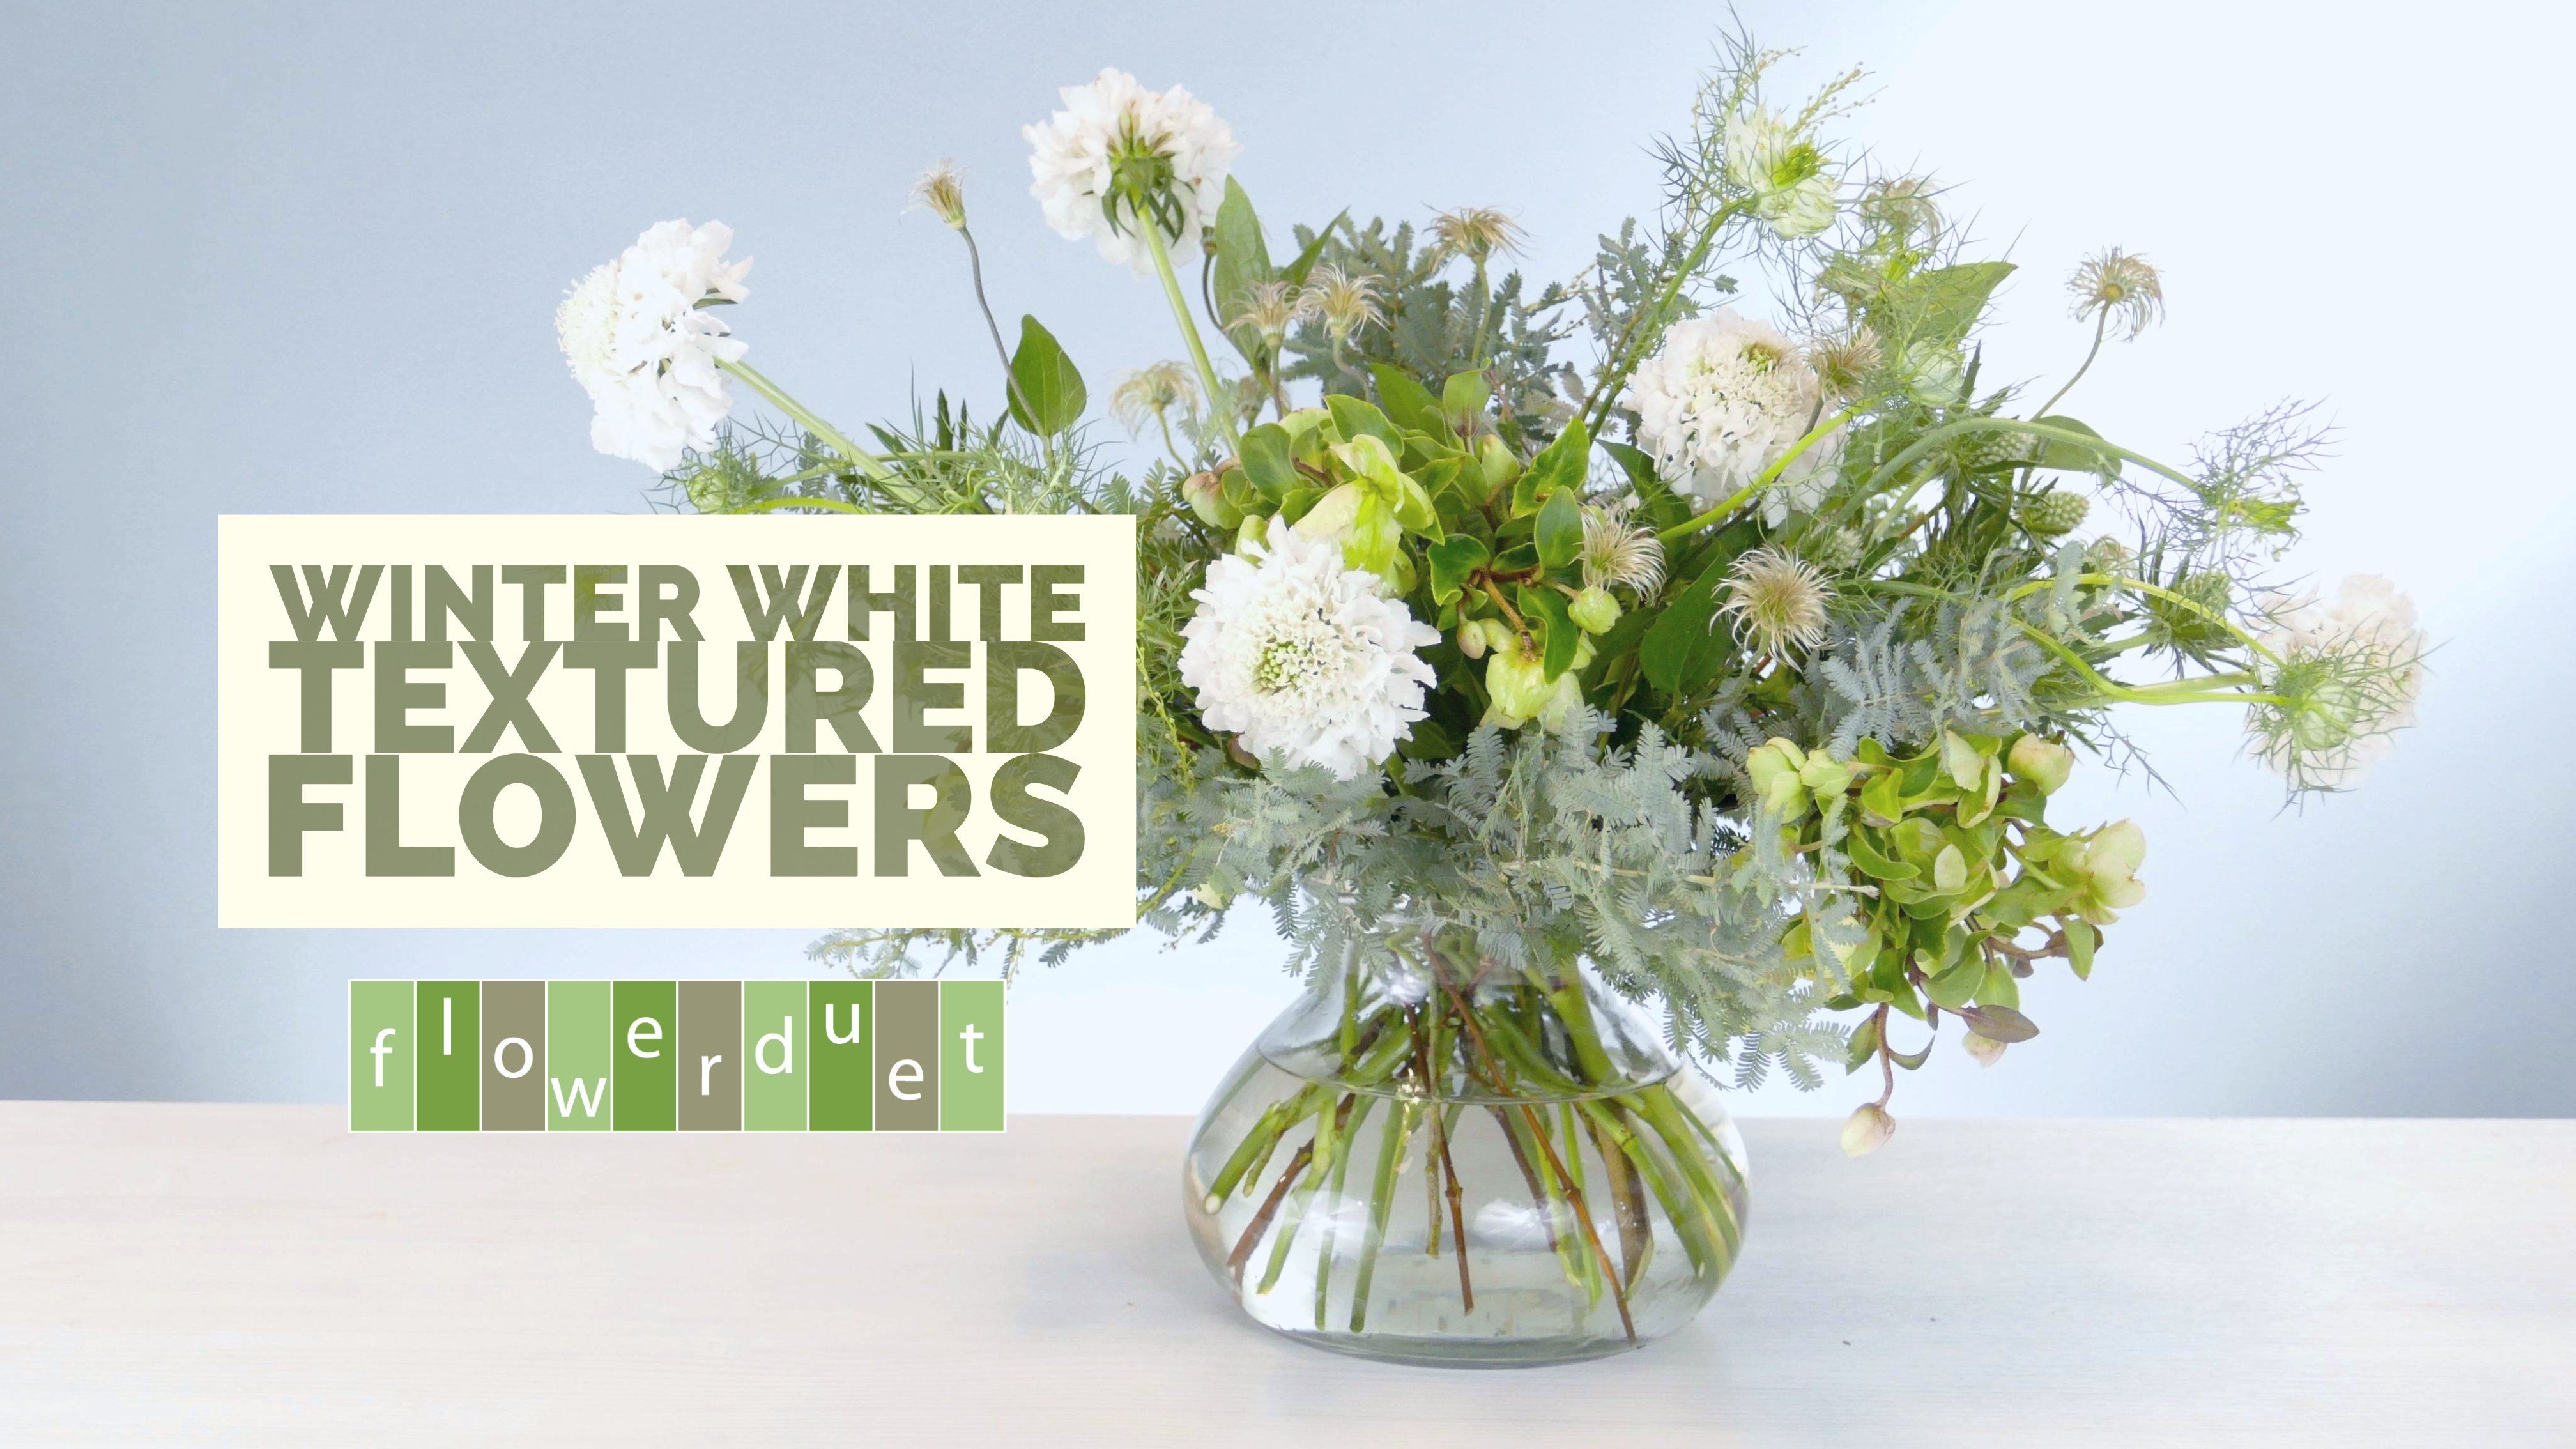 Winter White Textured Flowers